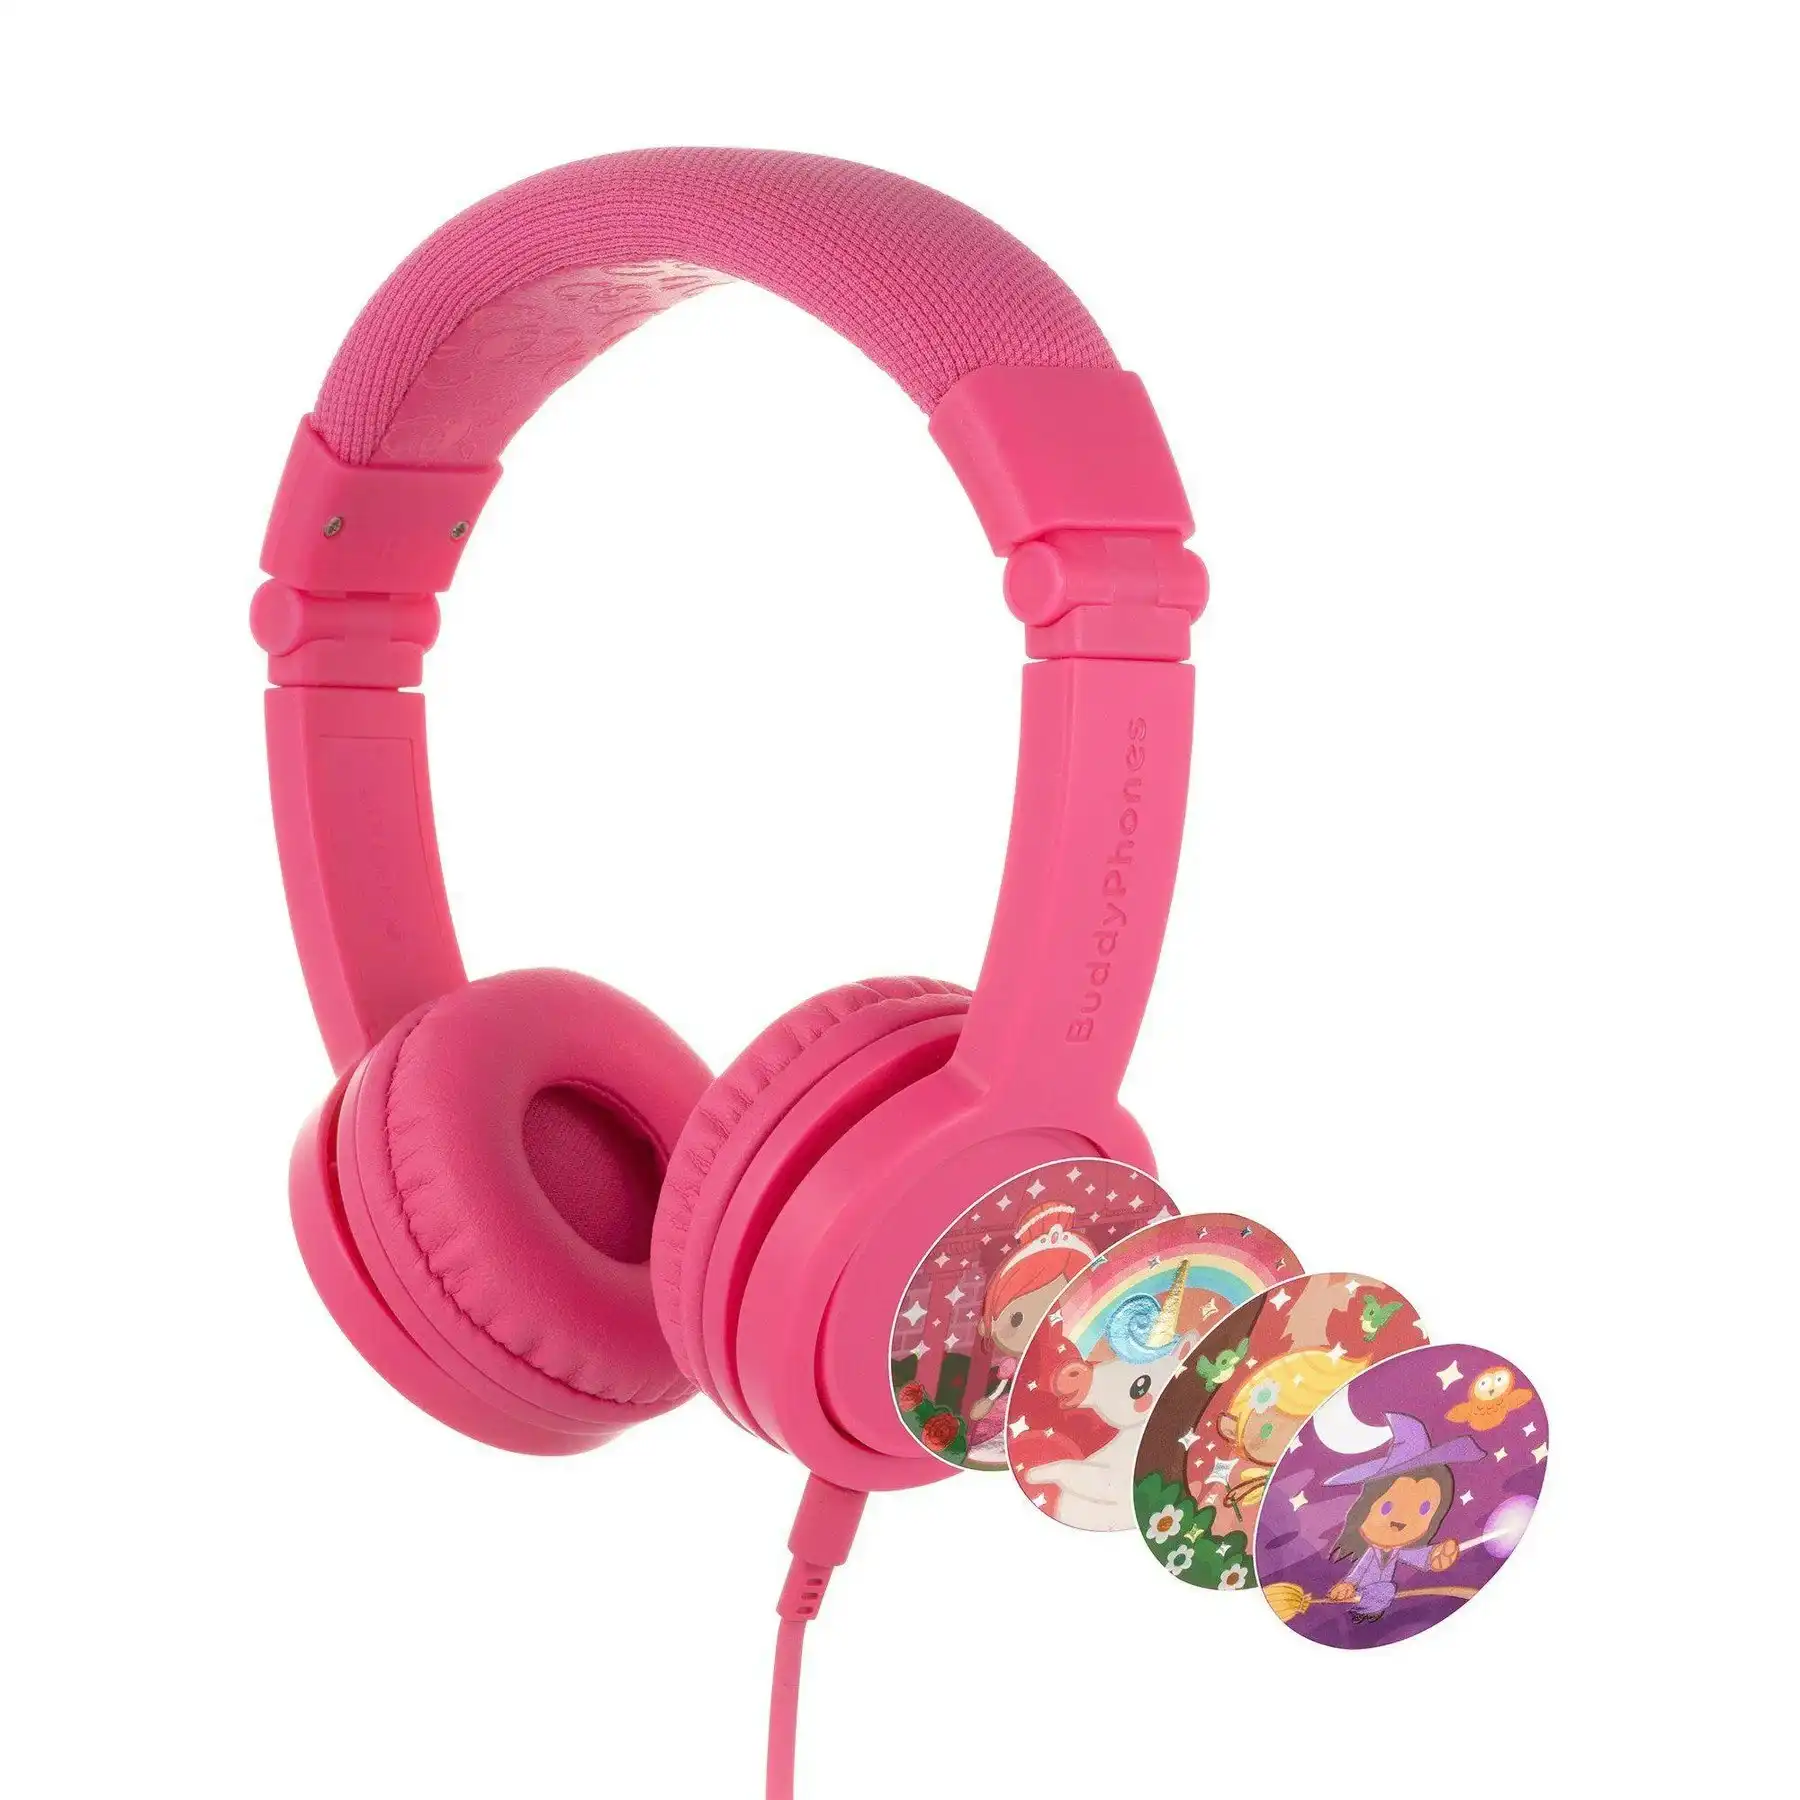 Buddyphones Explore Plus Wired Inline Mic Headphone - Rose Pink